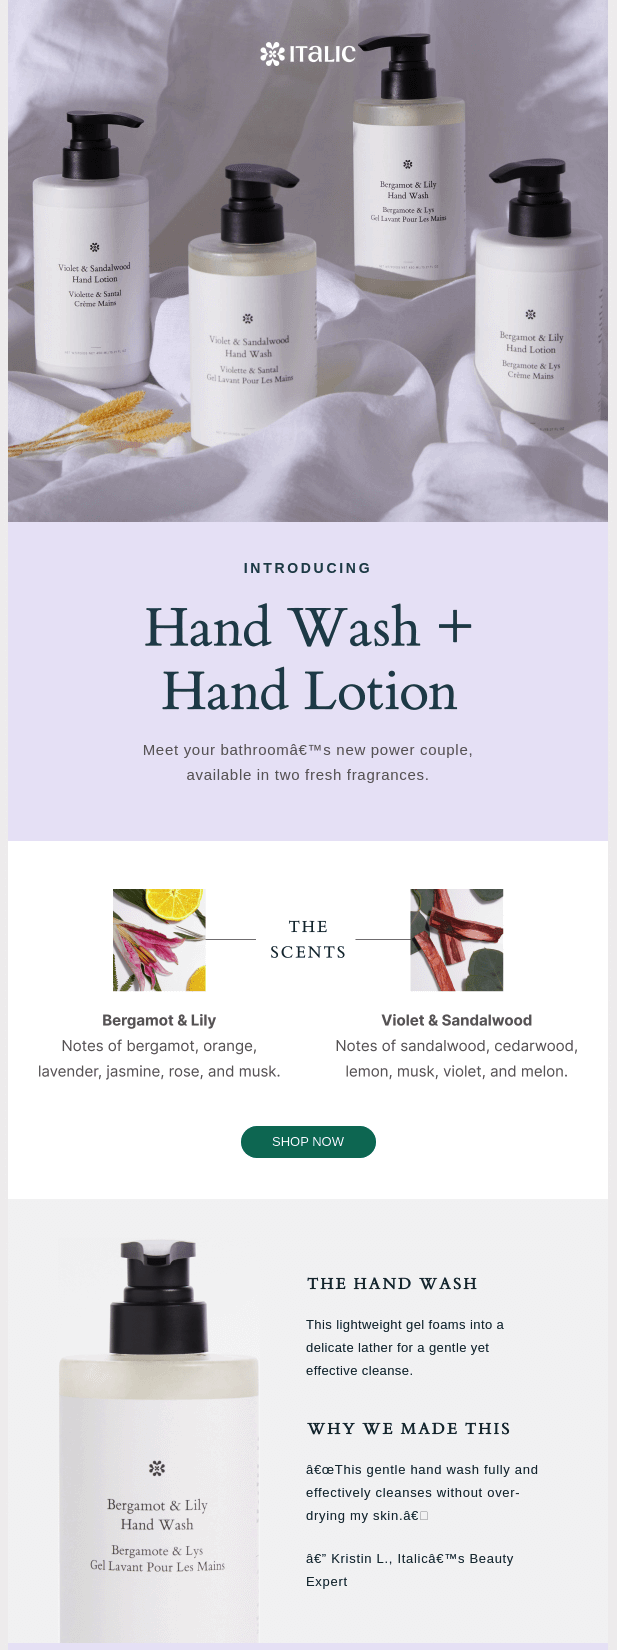 Global Handwashing Day newsletter example